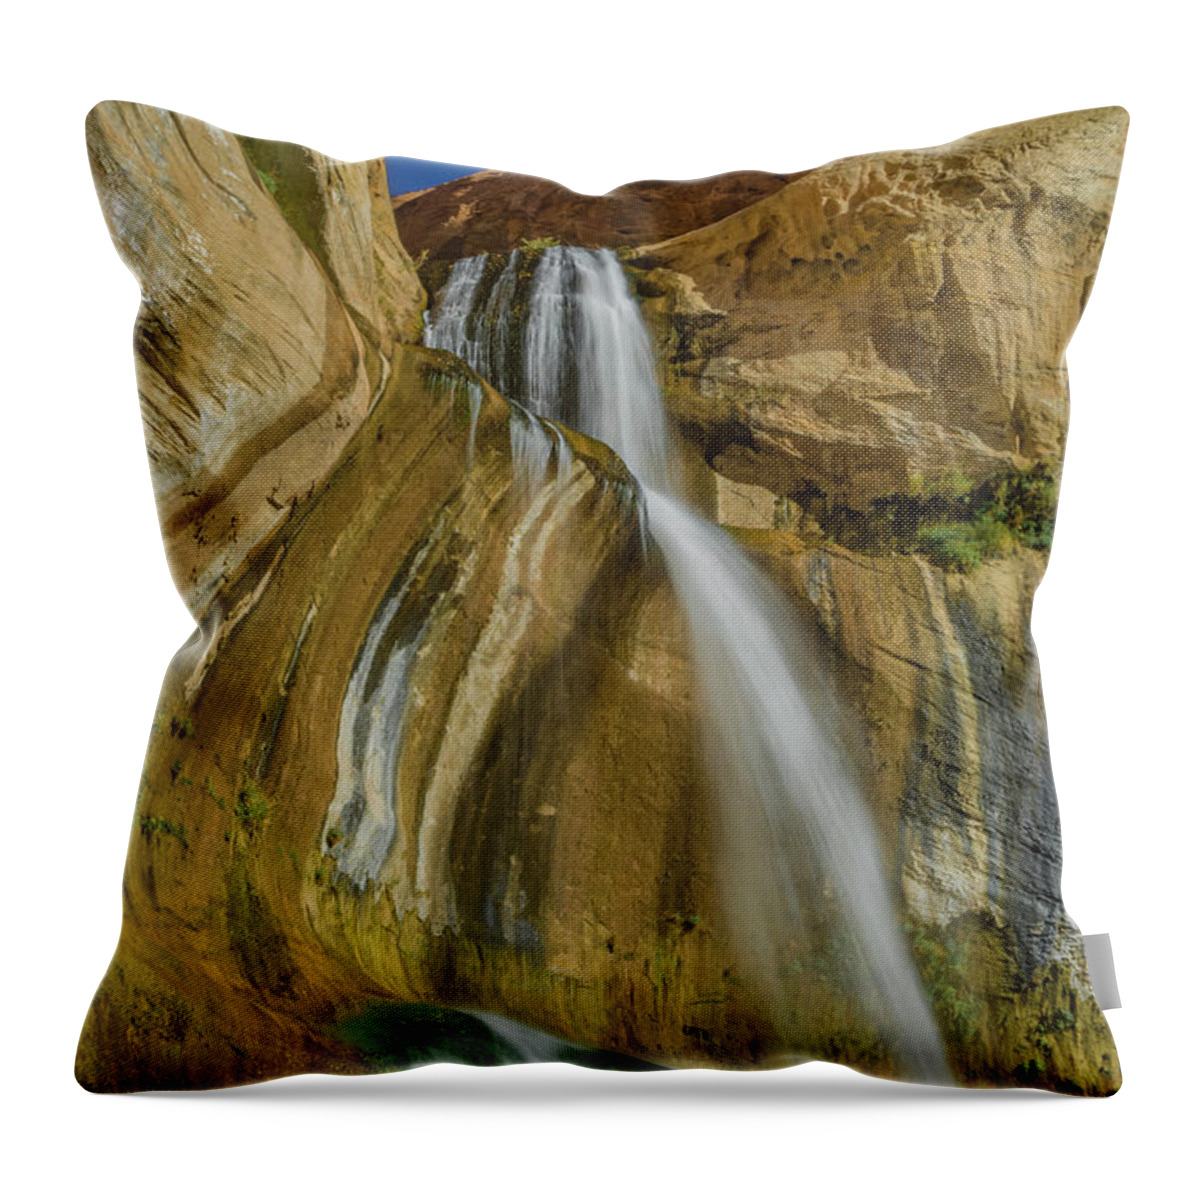 Jeff Foott Throw Pillow featuring the photograph Calf Creek Falls In Utah #2 by Jeff Foott